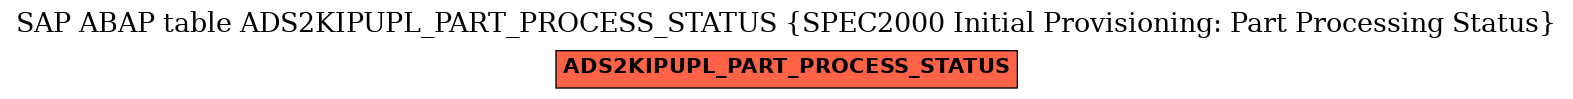 E-R Diagram for table ADS2KIPUPL_PART_PROCESS_STATUS (SPEC2000 Initial Provisioning: Part Processing Status)